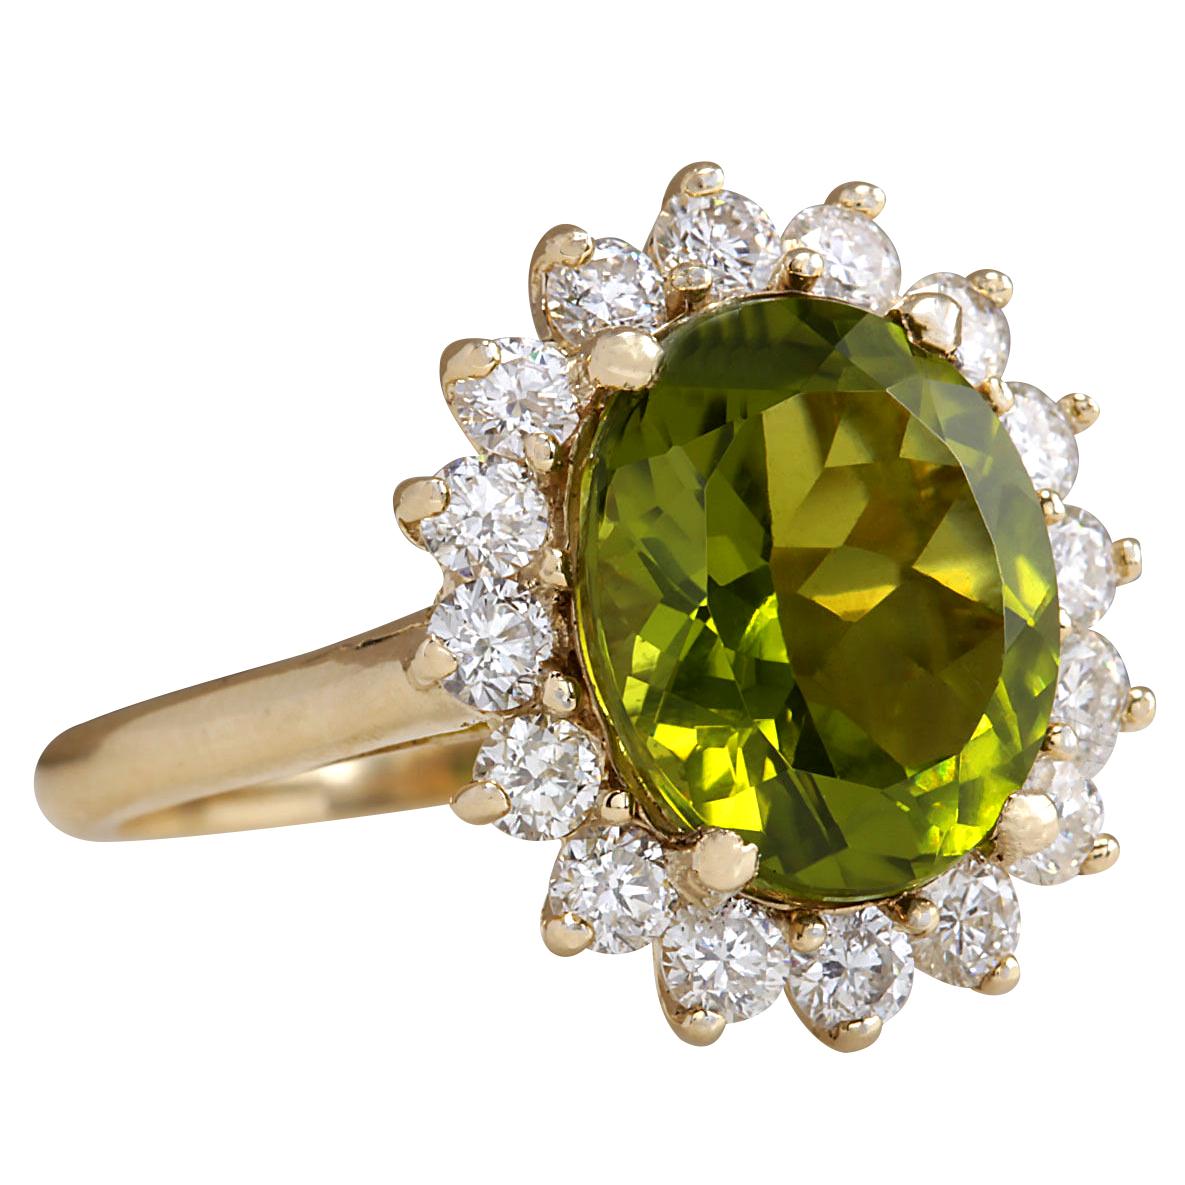 5.53 Carat Natural Peridot 14 Karat Yellow Gold Diamond Ring
Stamped: 14K Yellow Gold
Total Ring Weight: 5.0 Grams
Total Natural Peridot Weight is 4.47 Carat (Measures: 12.00x10.00 mm)
Color: Green
Total Natural Diamond Weight is 1.06 Carat
Color: